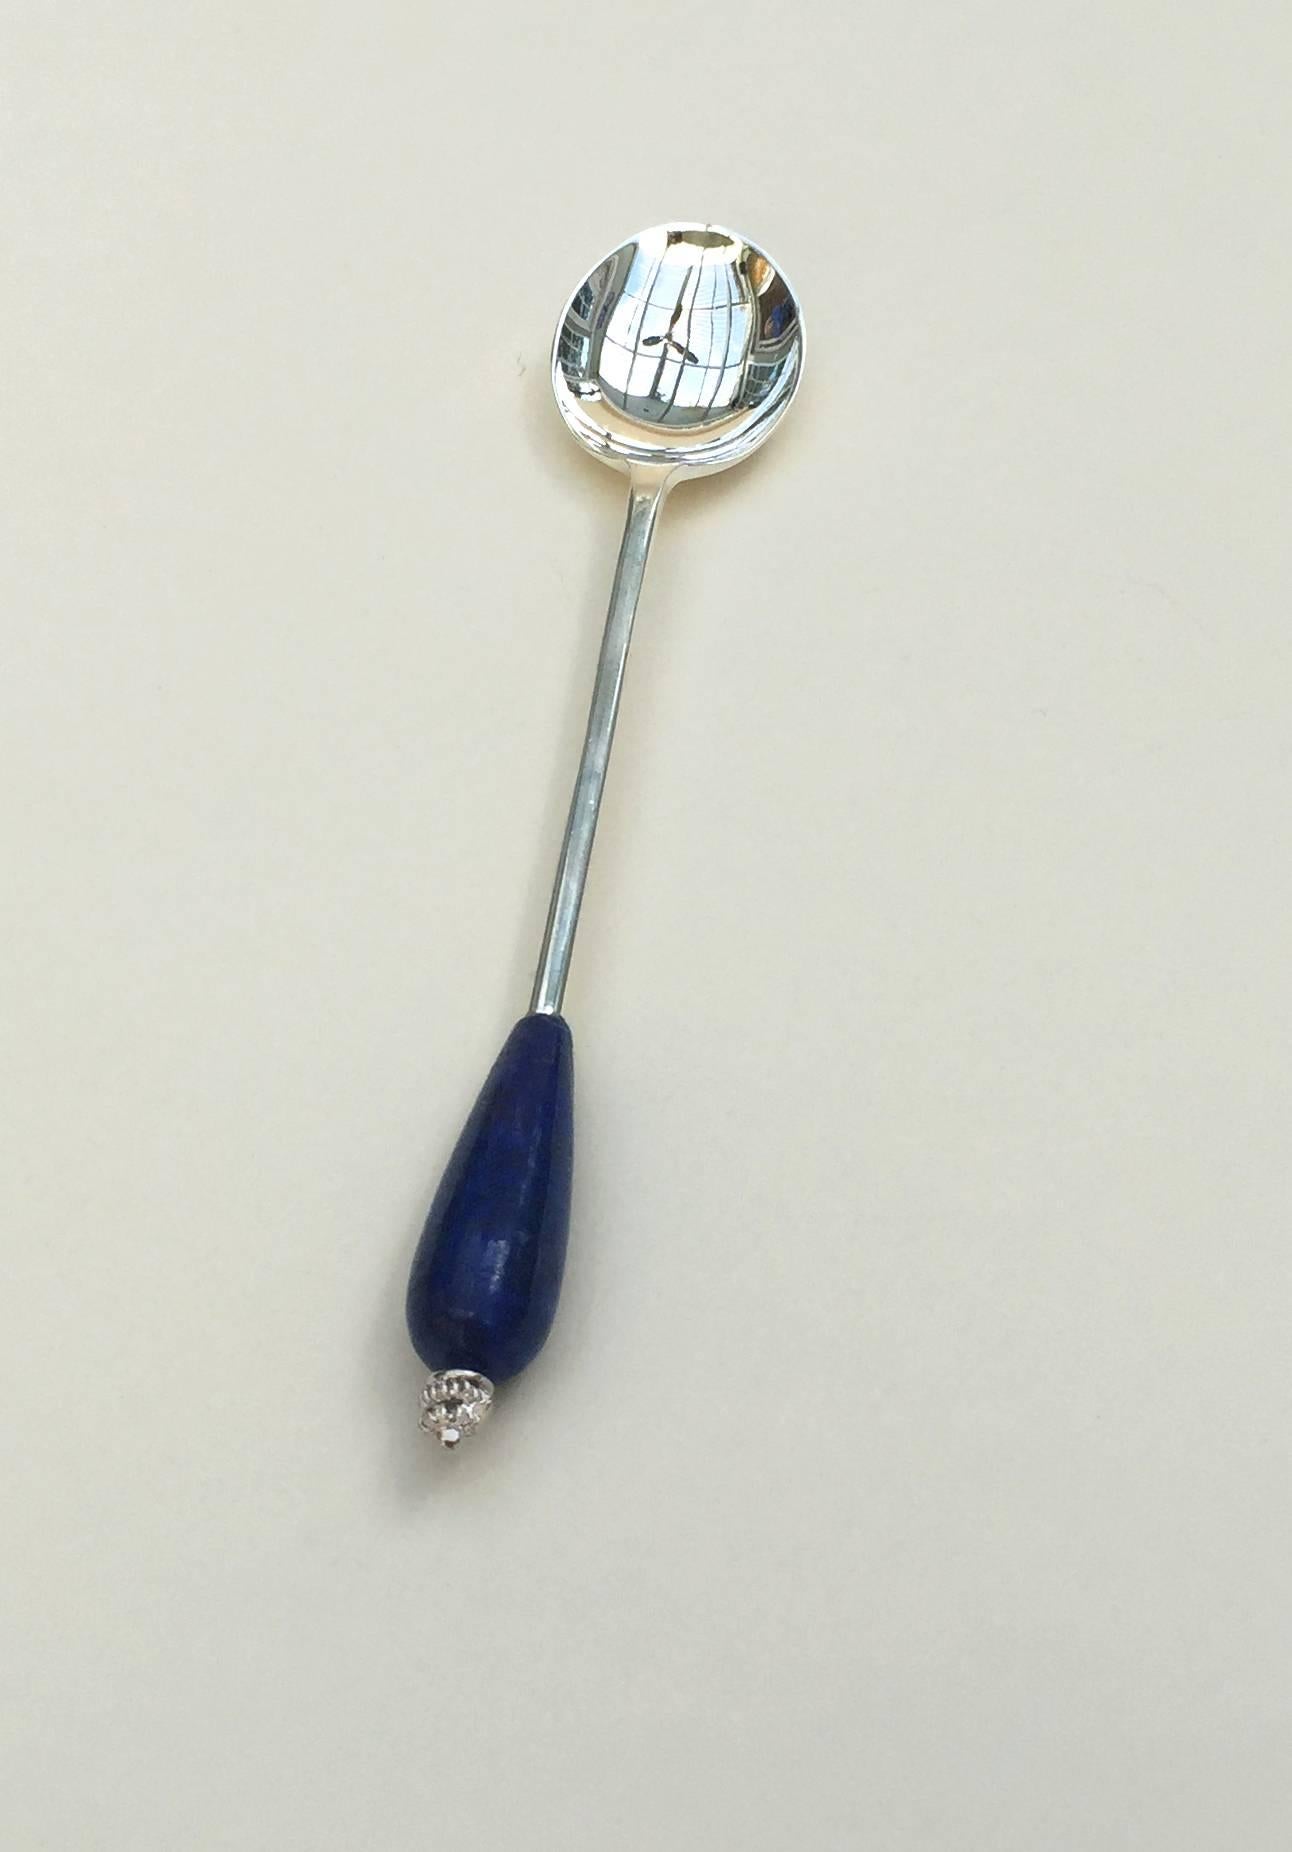 Six English Silver Plated Tea Spoon Set with Lapis Lazuli by Marina J 1